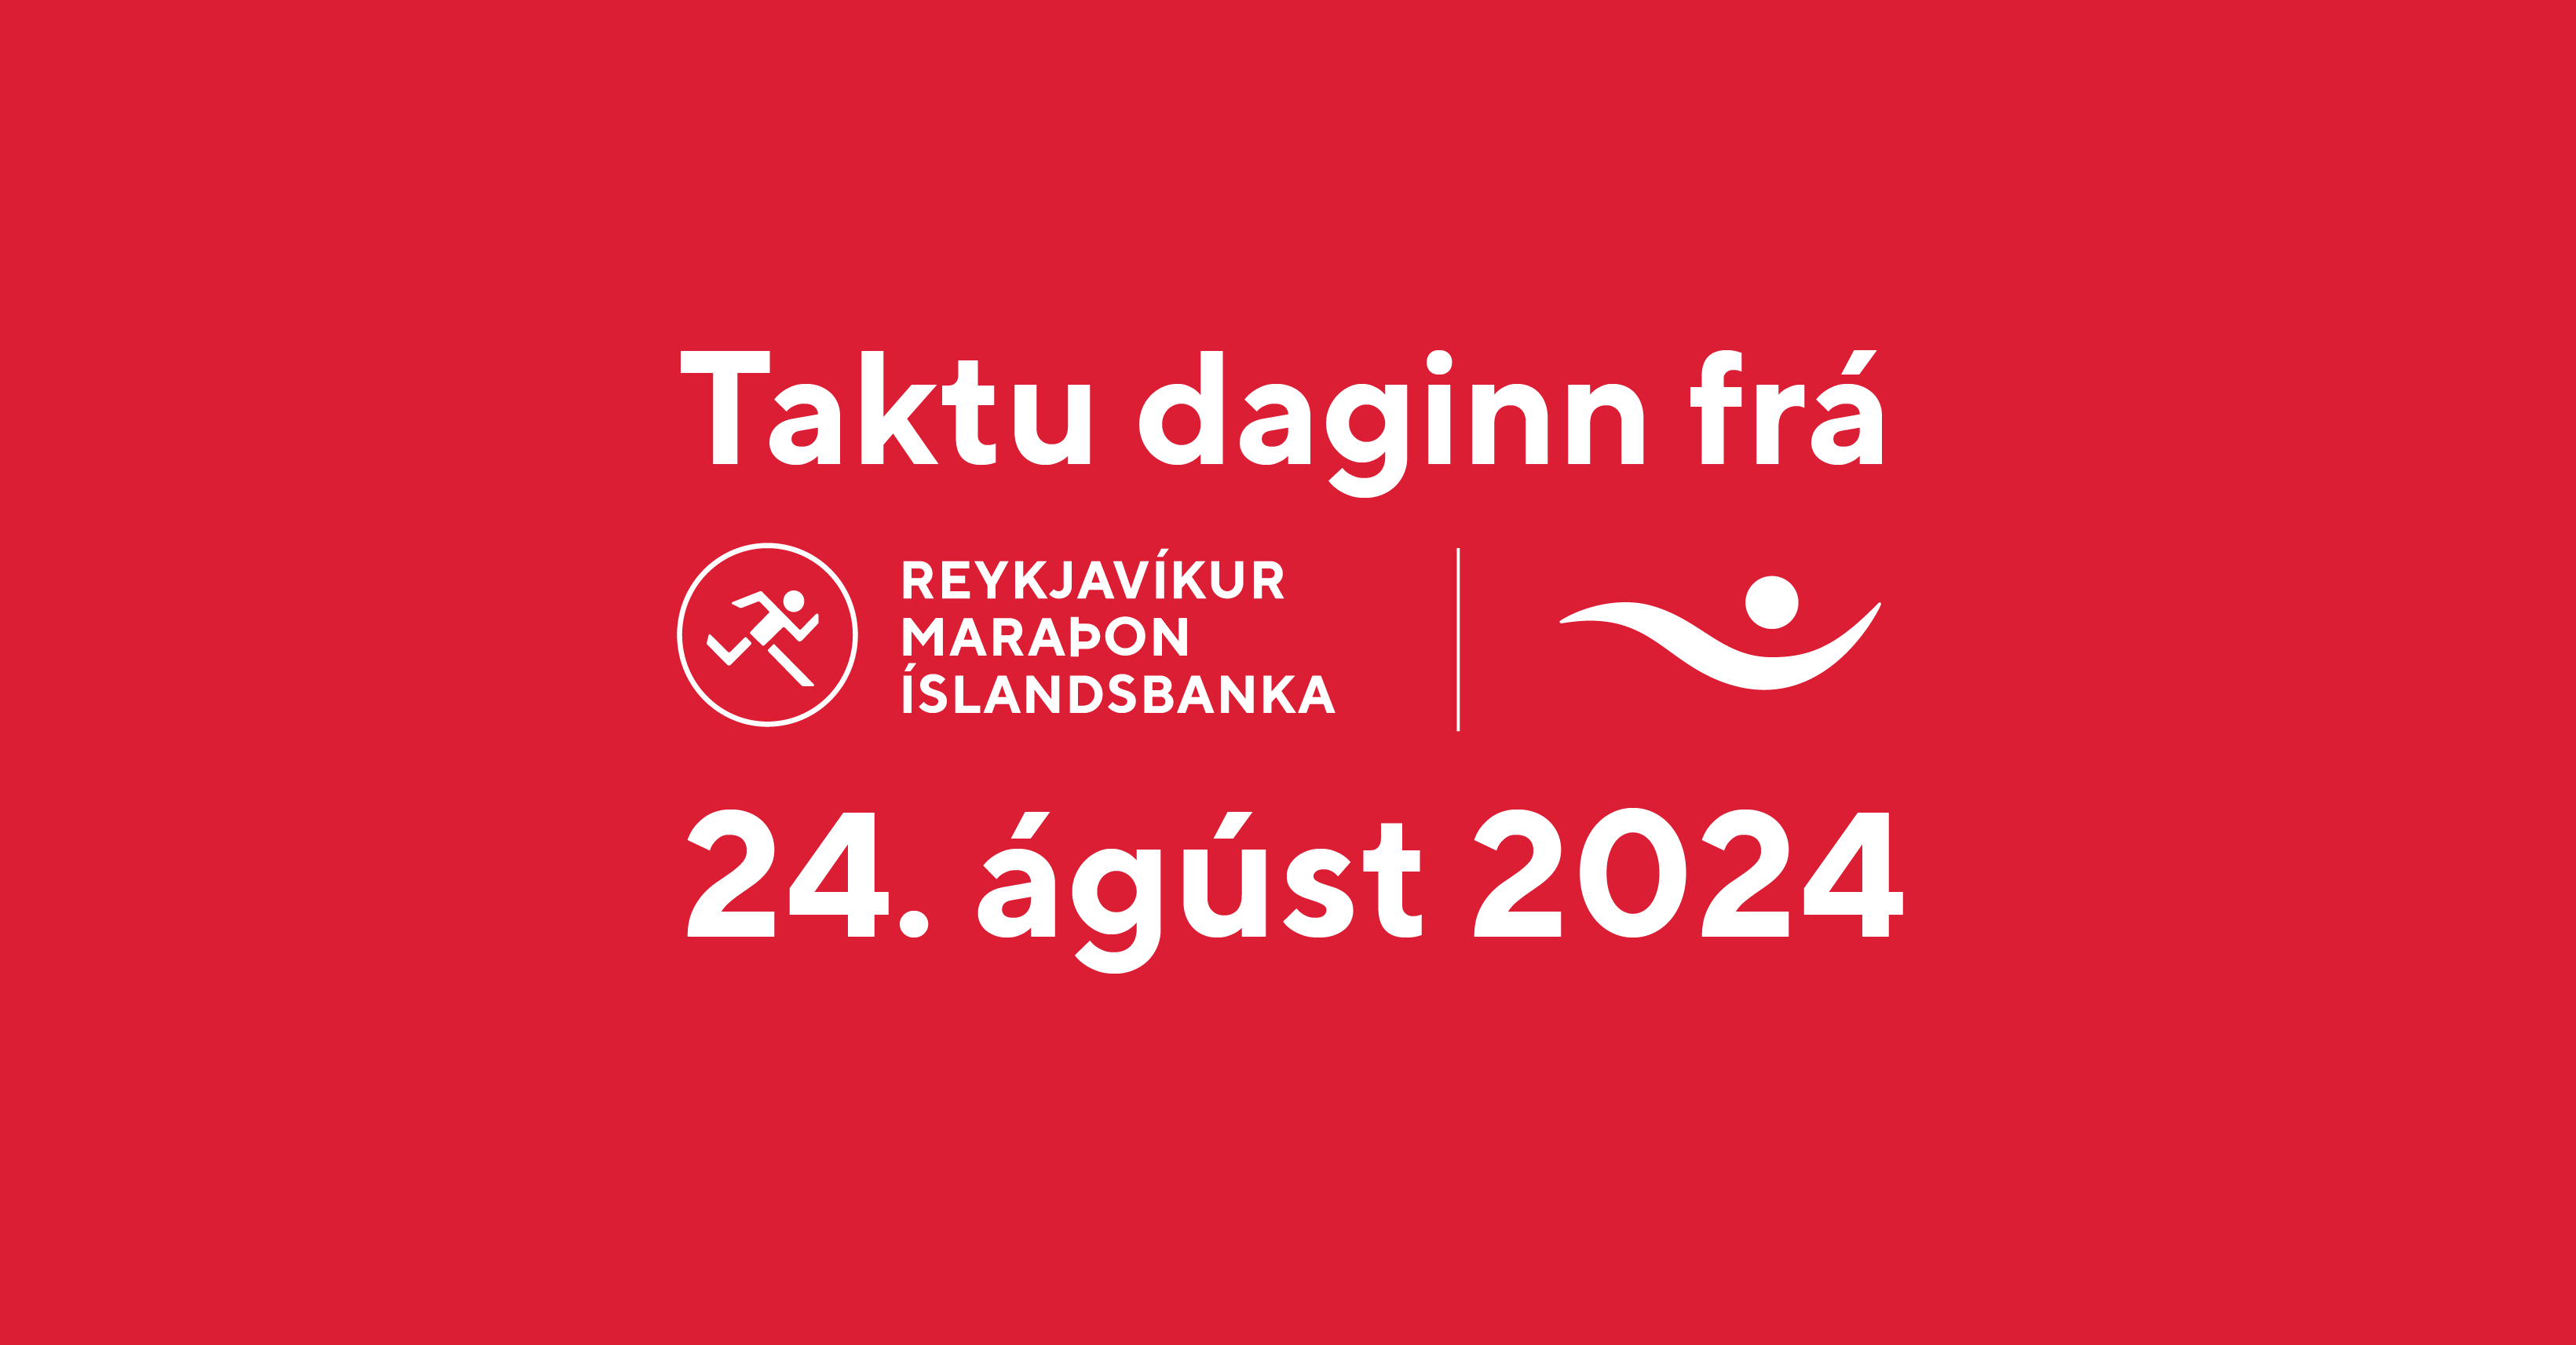 Islandsbanki Reykjavik Marathon 2024 event image